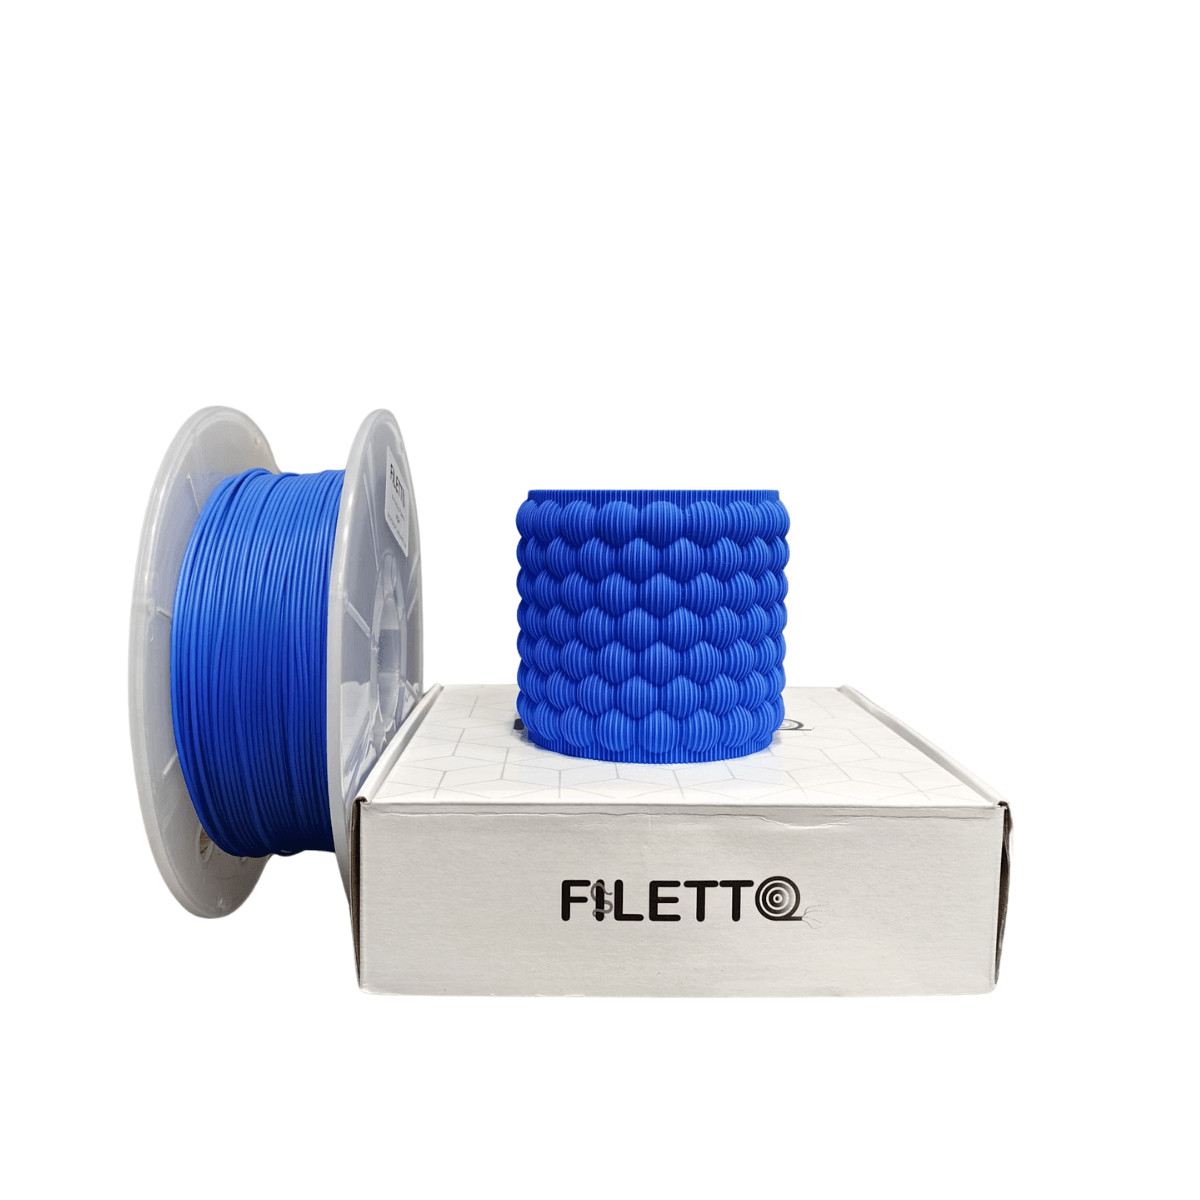 Filetto Pla+ Filament 1.75mm 1KG - Blue